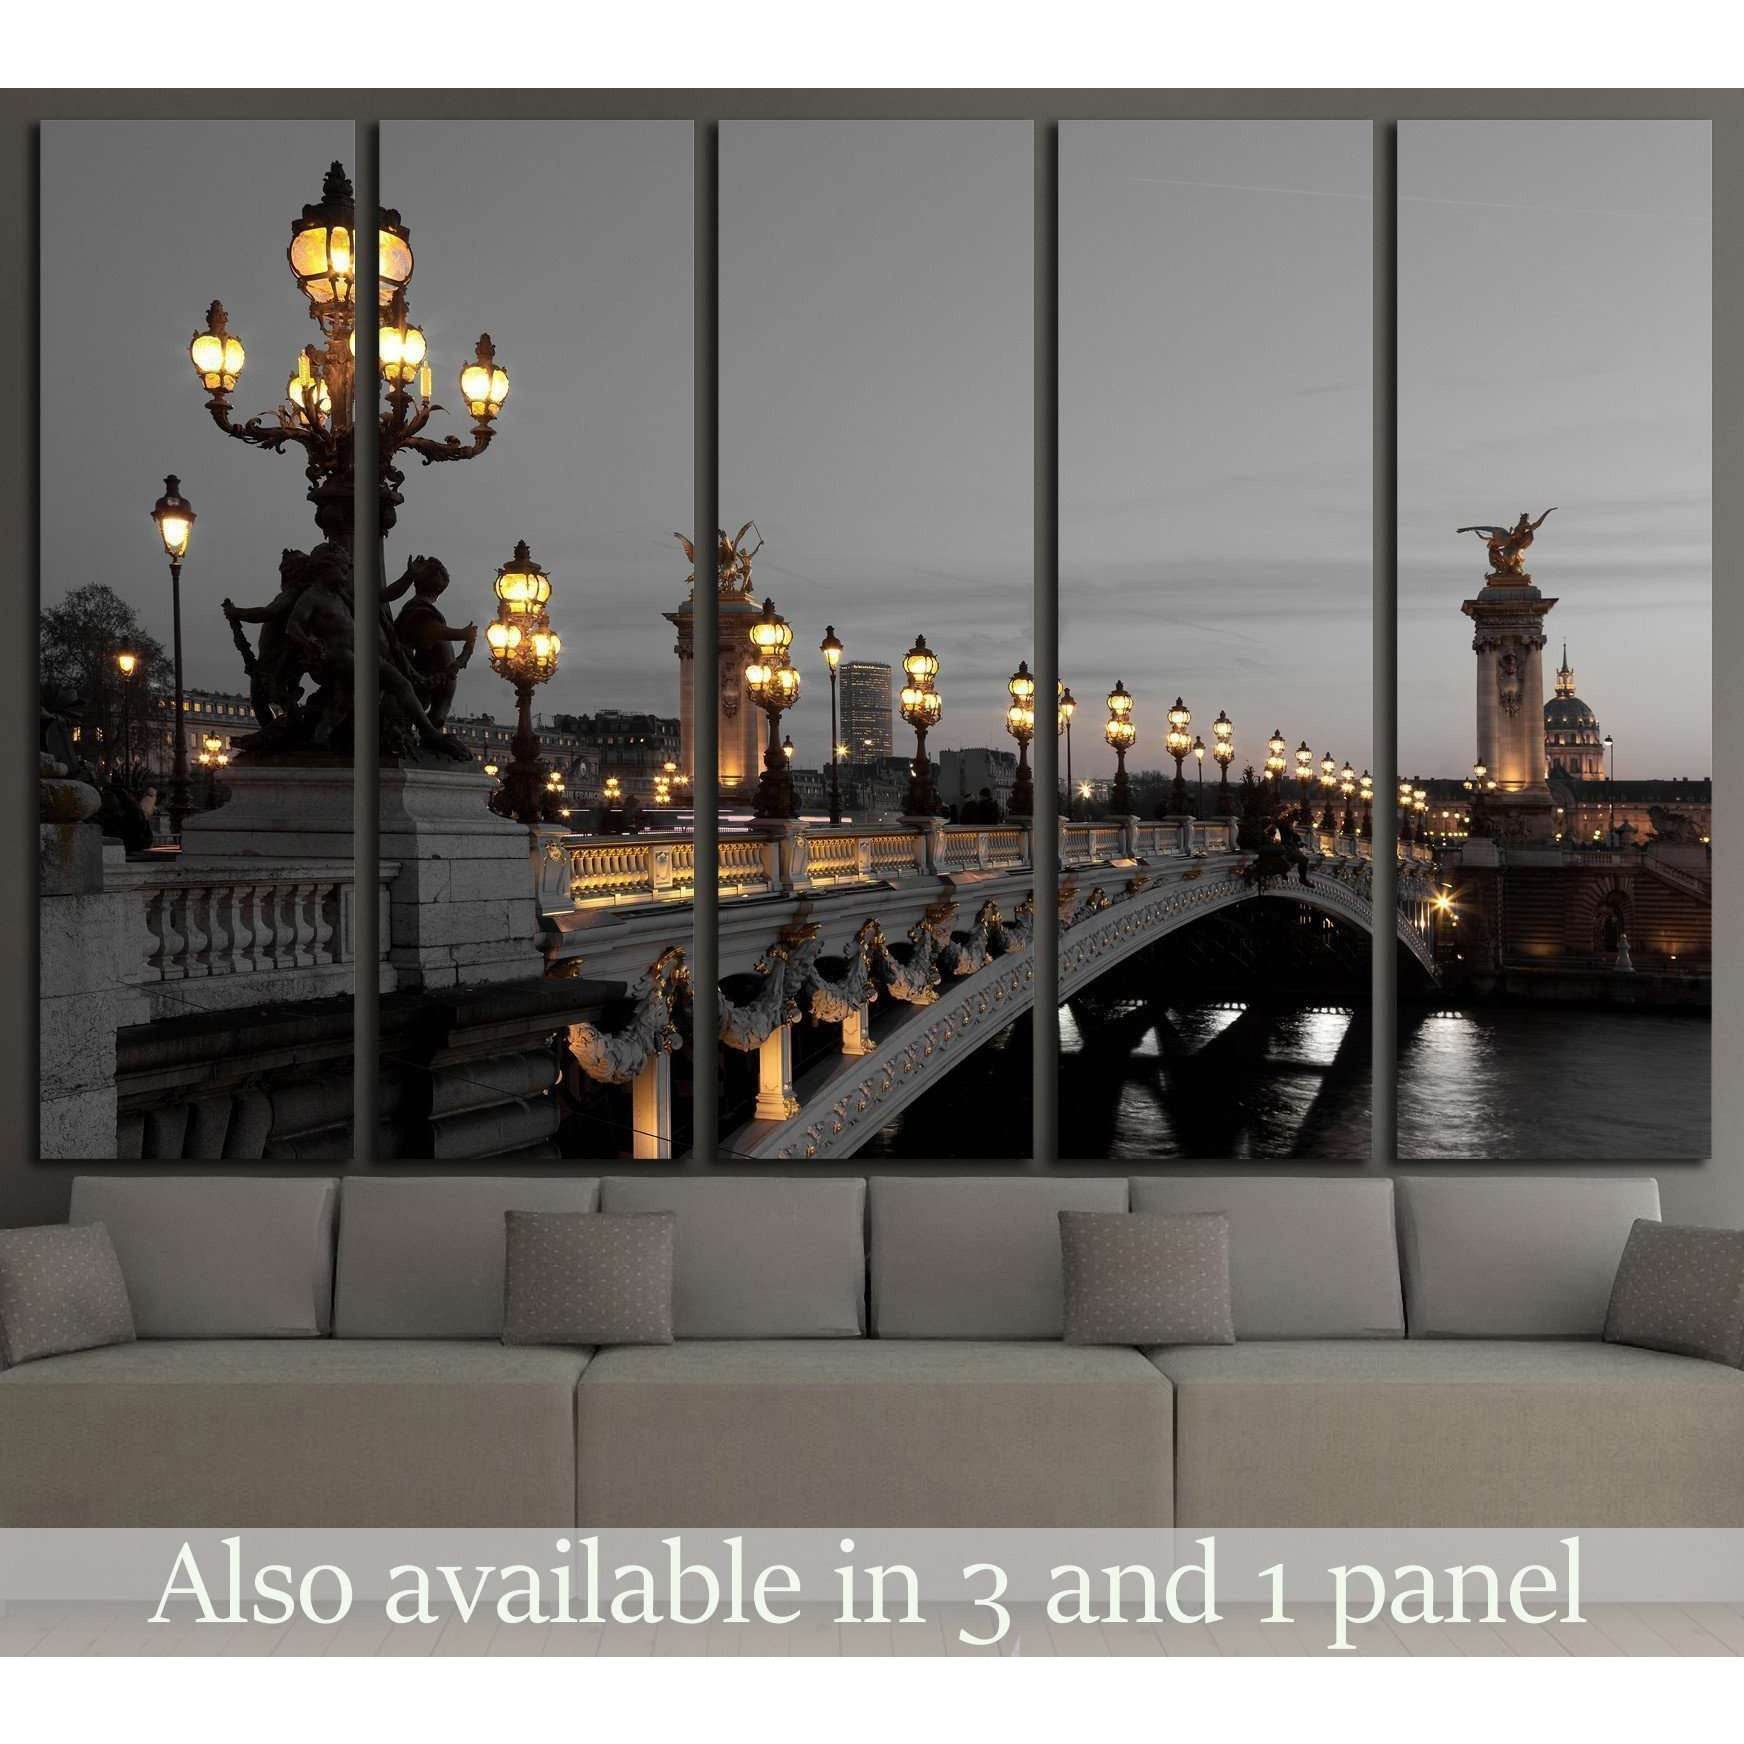 Alexander III bridge, Paris, France №1159 Ready to Hang Canvas Print